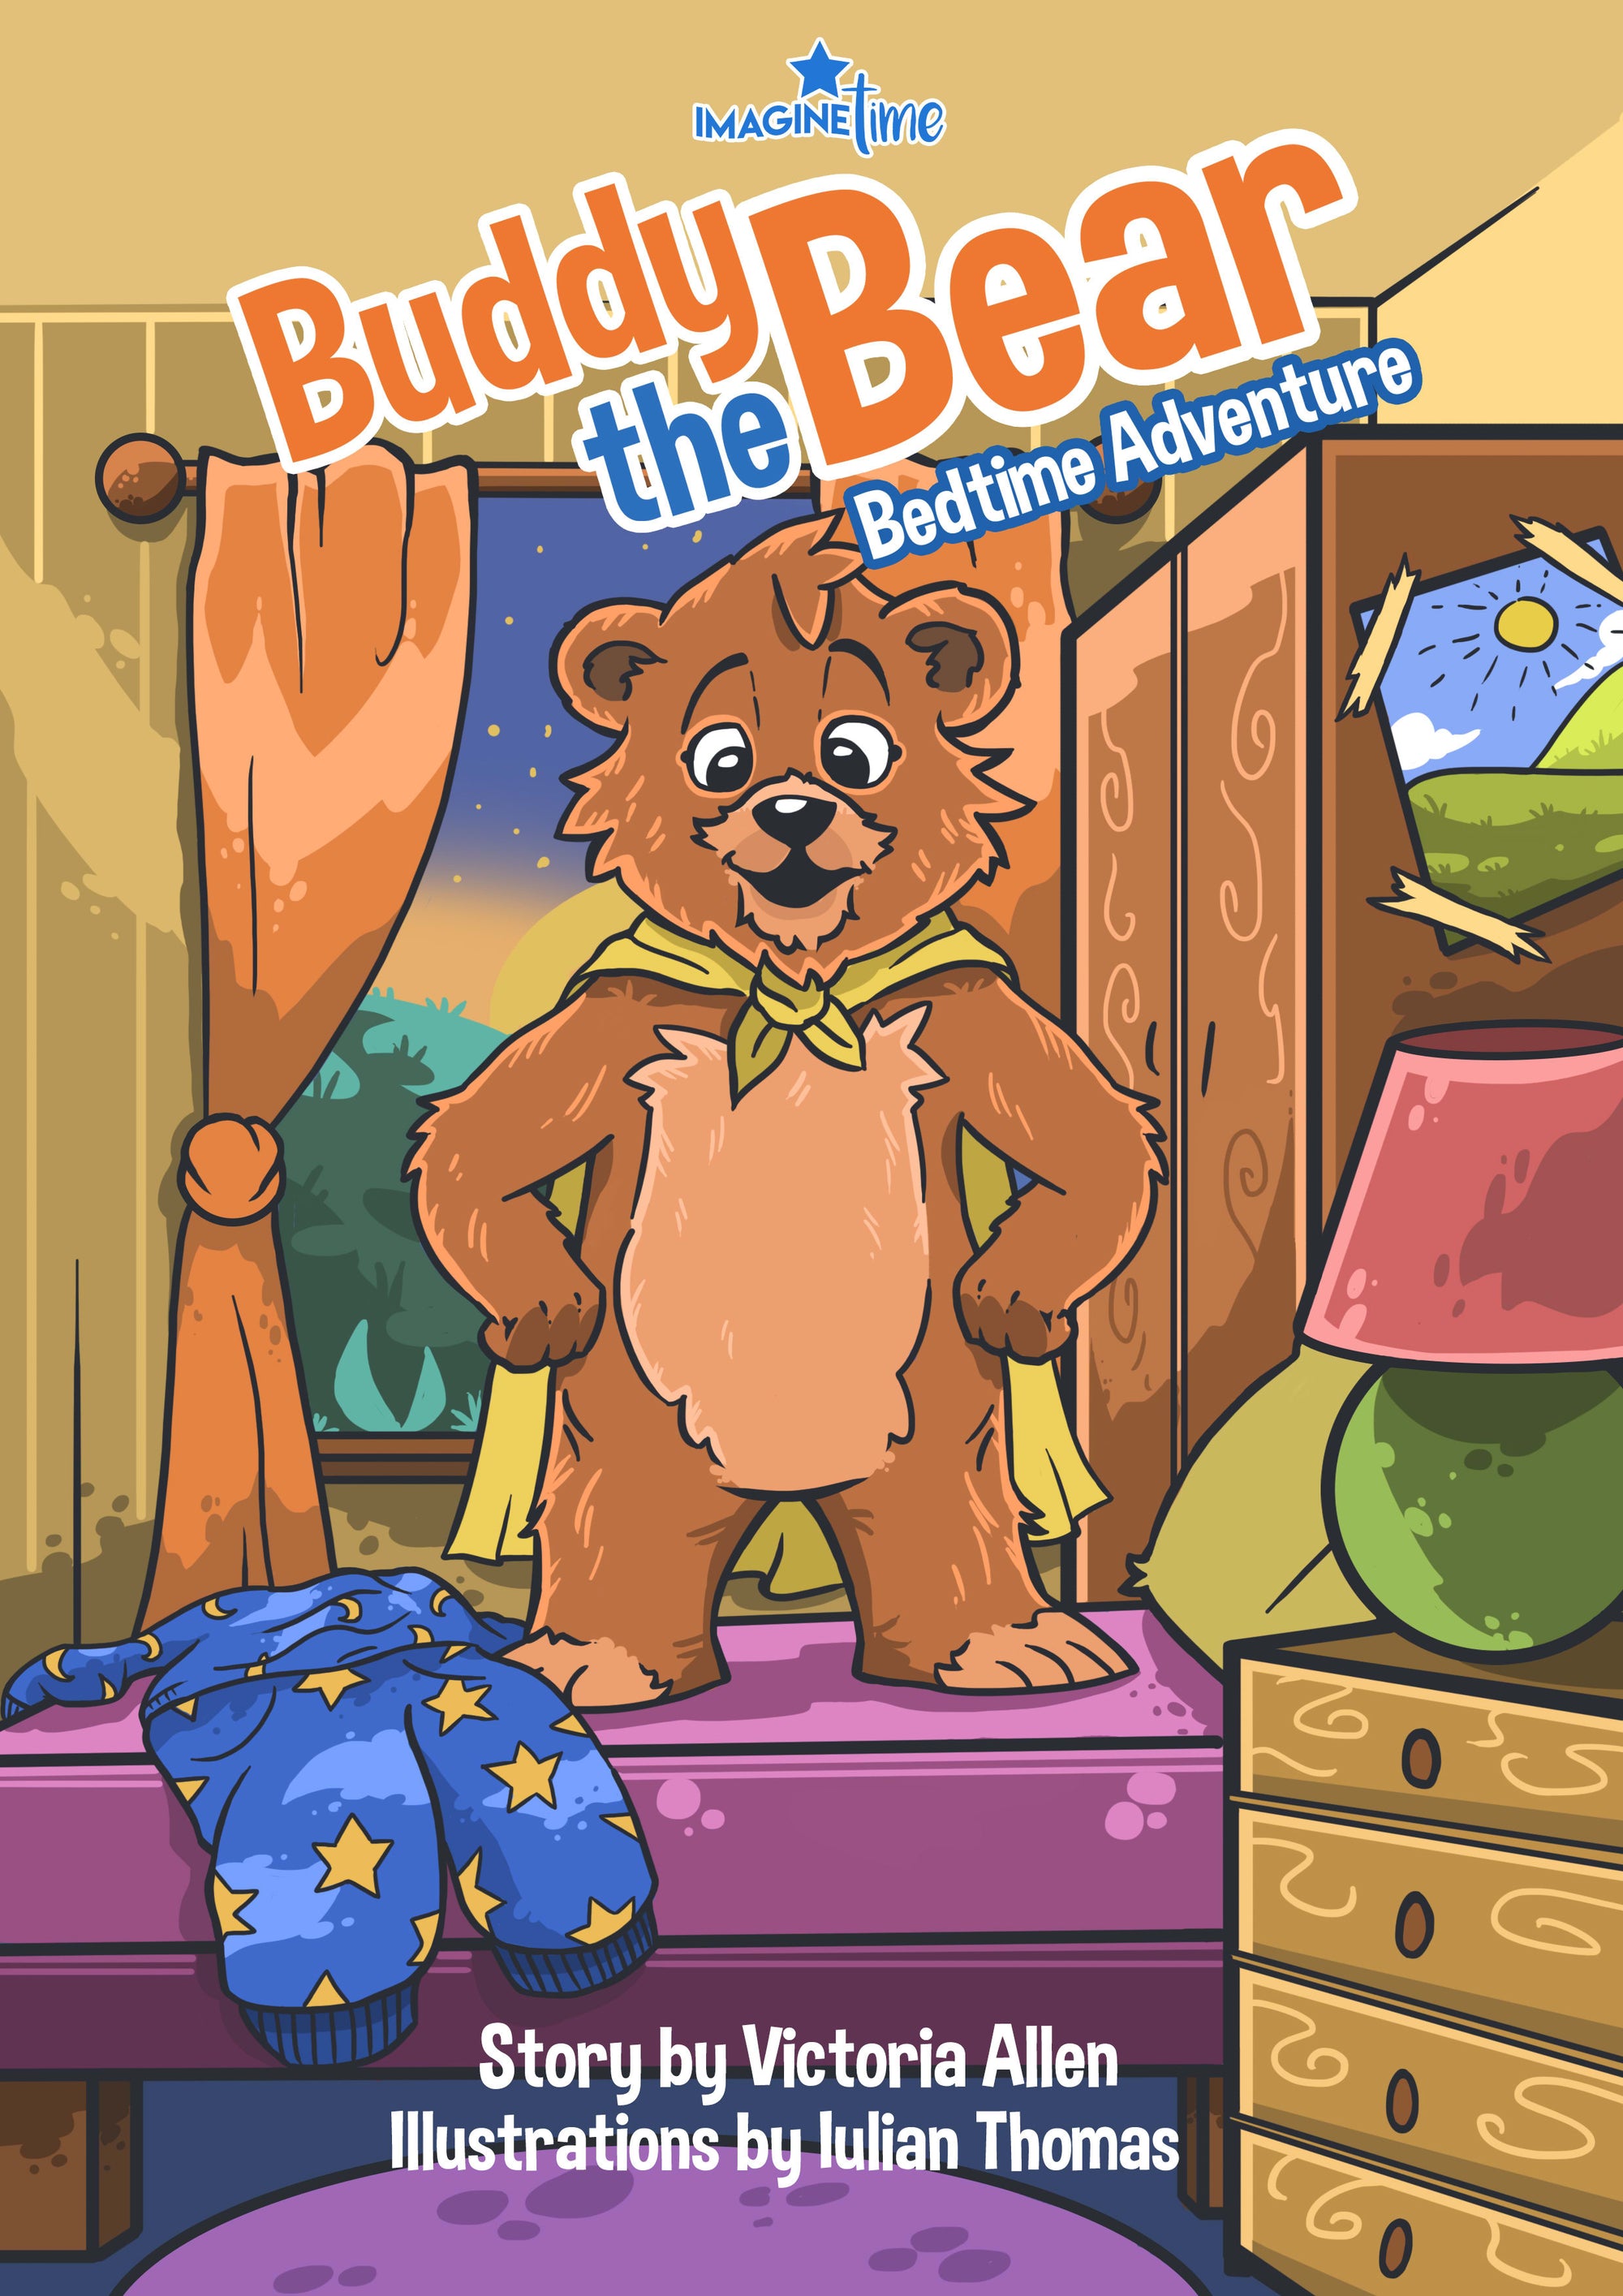 BUDDY THE BEAR AUDIO BOOK